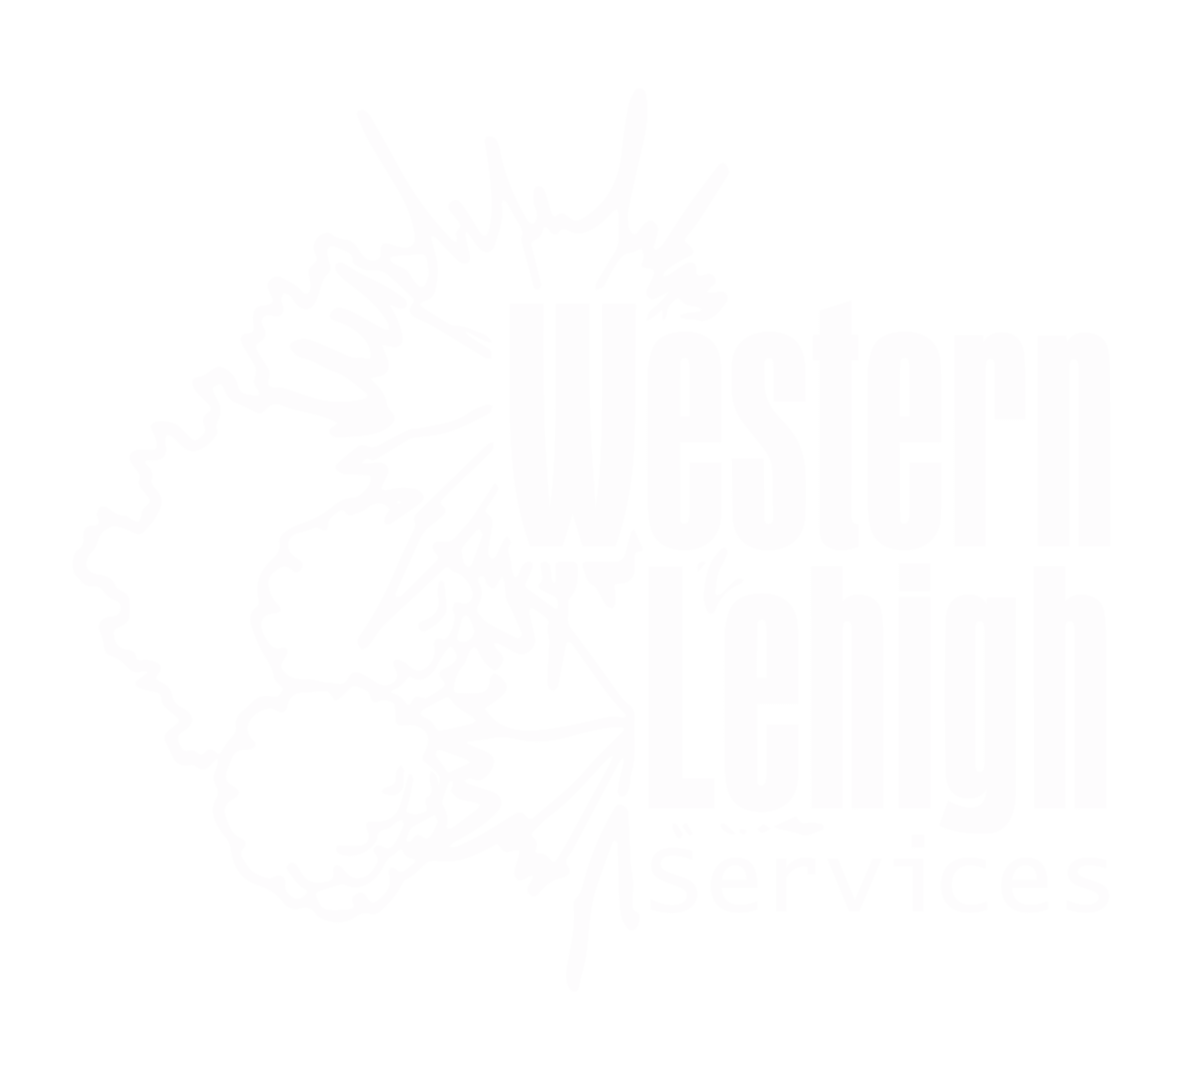 Western lehigh services logo.